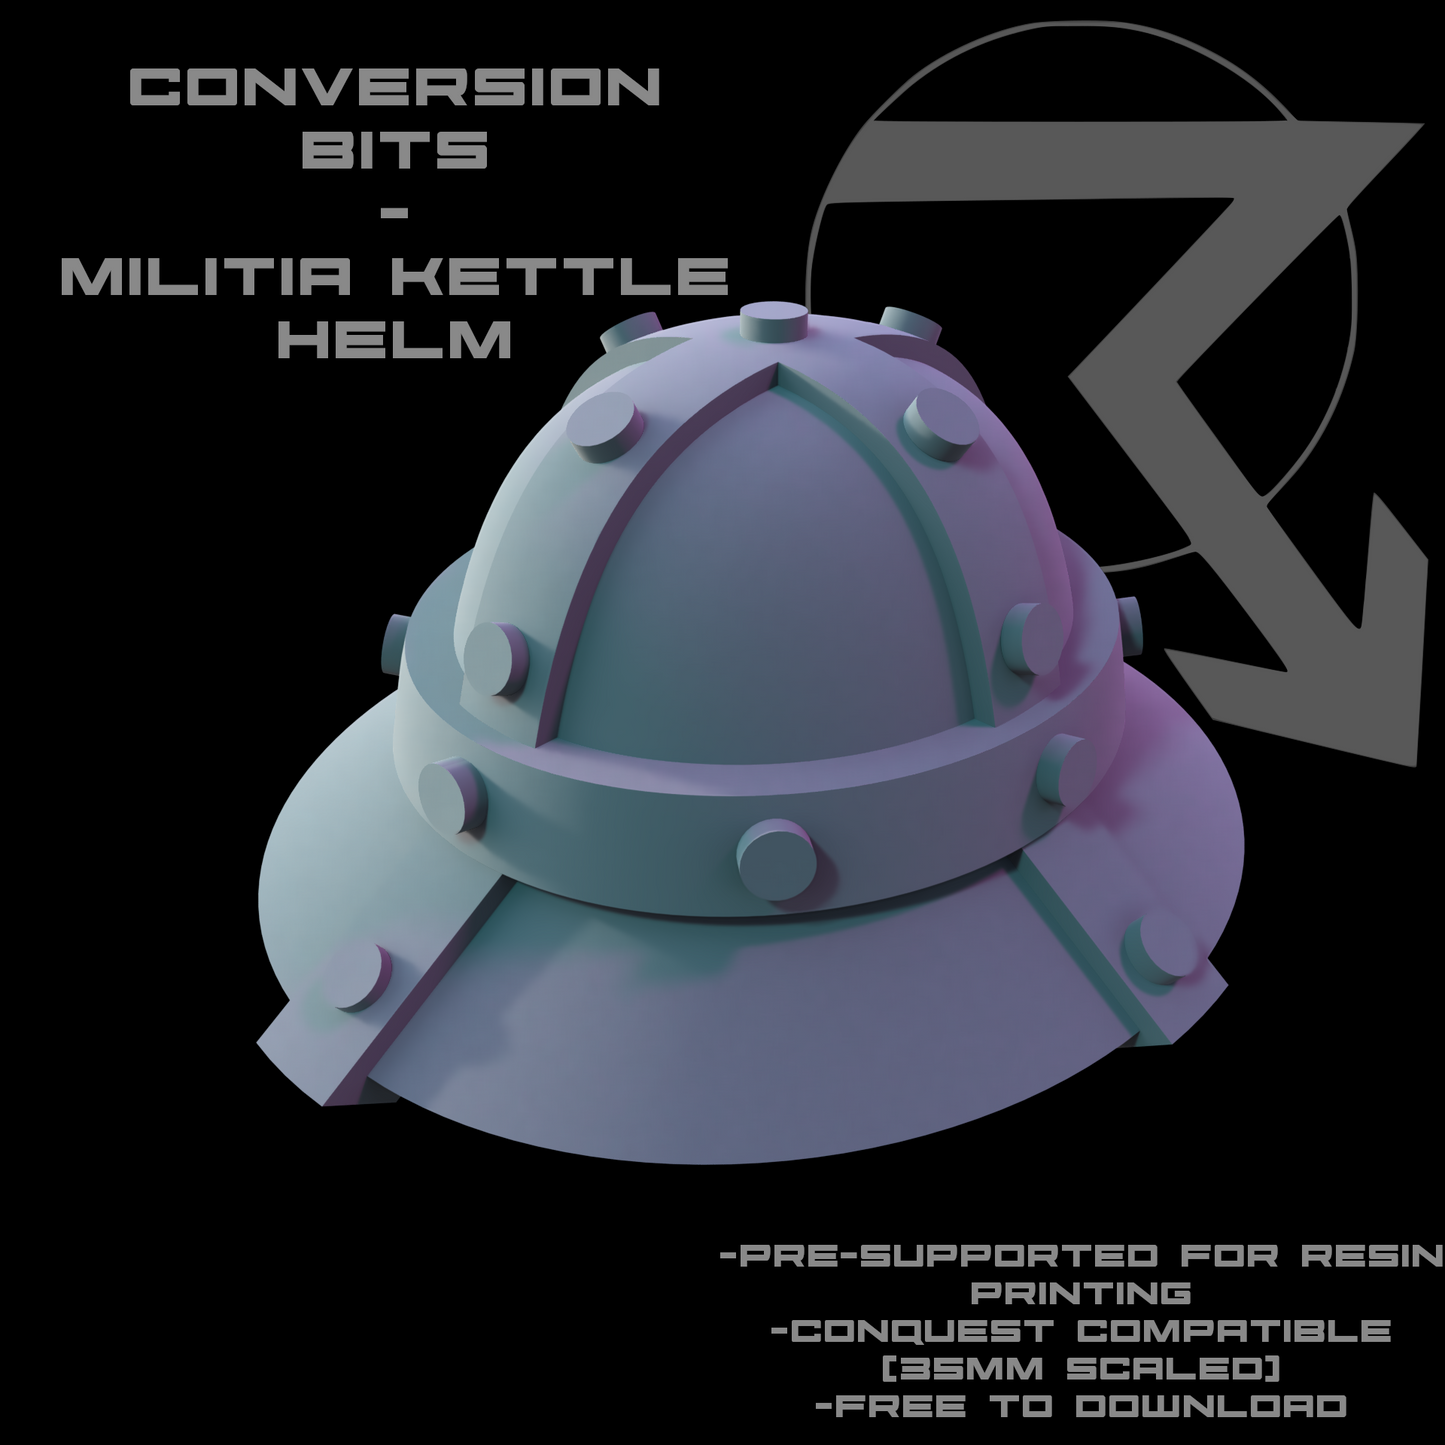 Conversion Bits - Conquest - Militia Kettle Helm